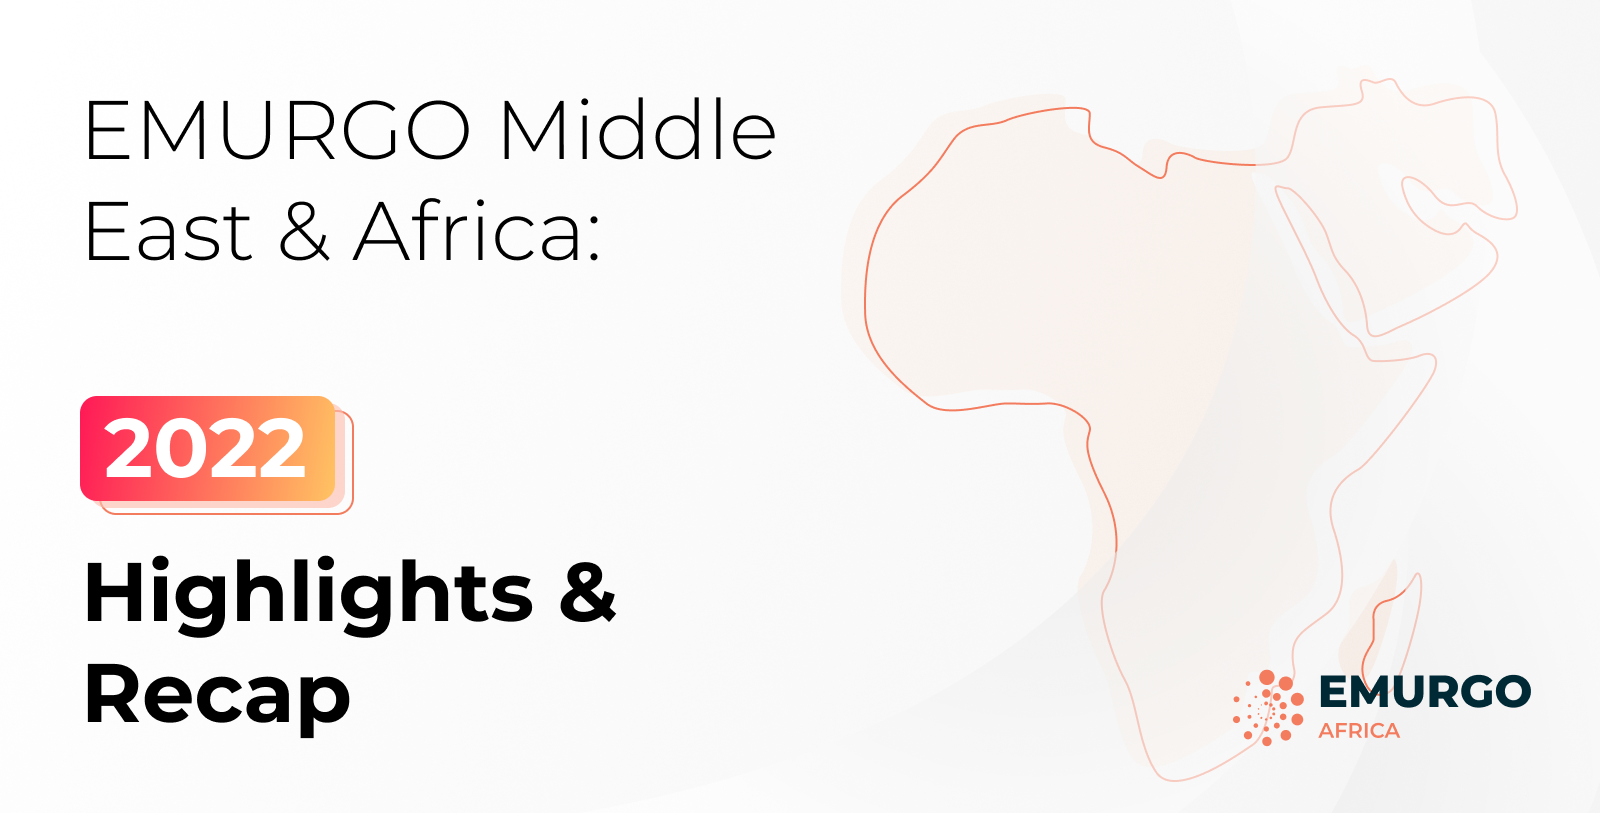 EMURGO Middle East & Africa: 2022 Highlights & Recap